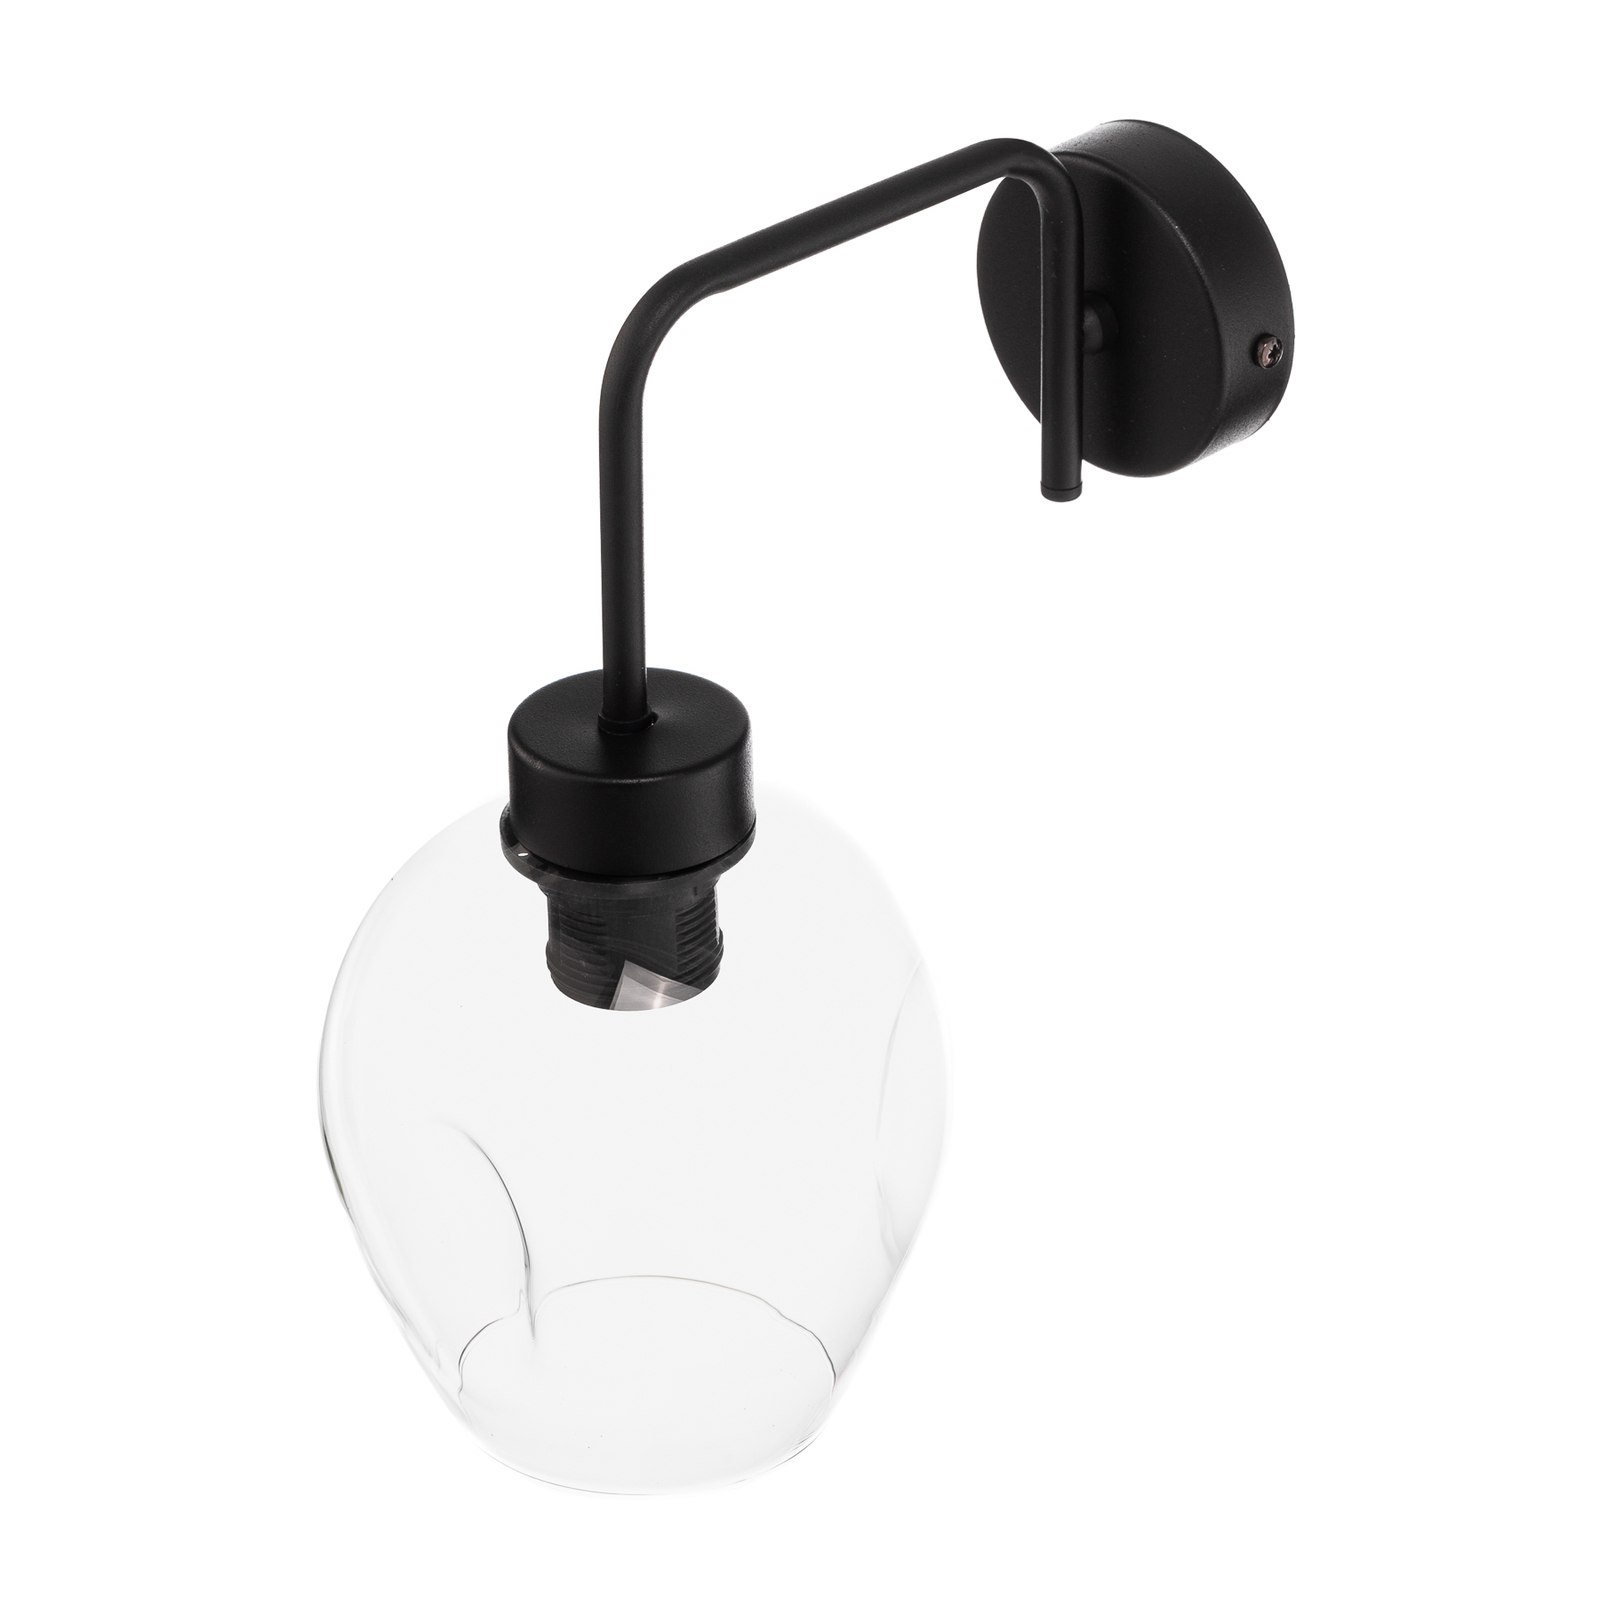 Lukka wall light, one-bulb, black/clear